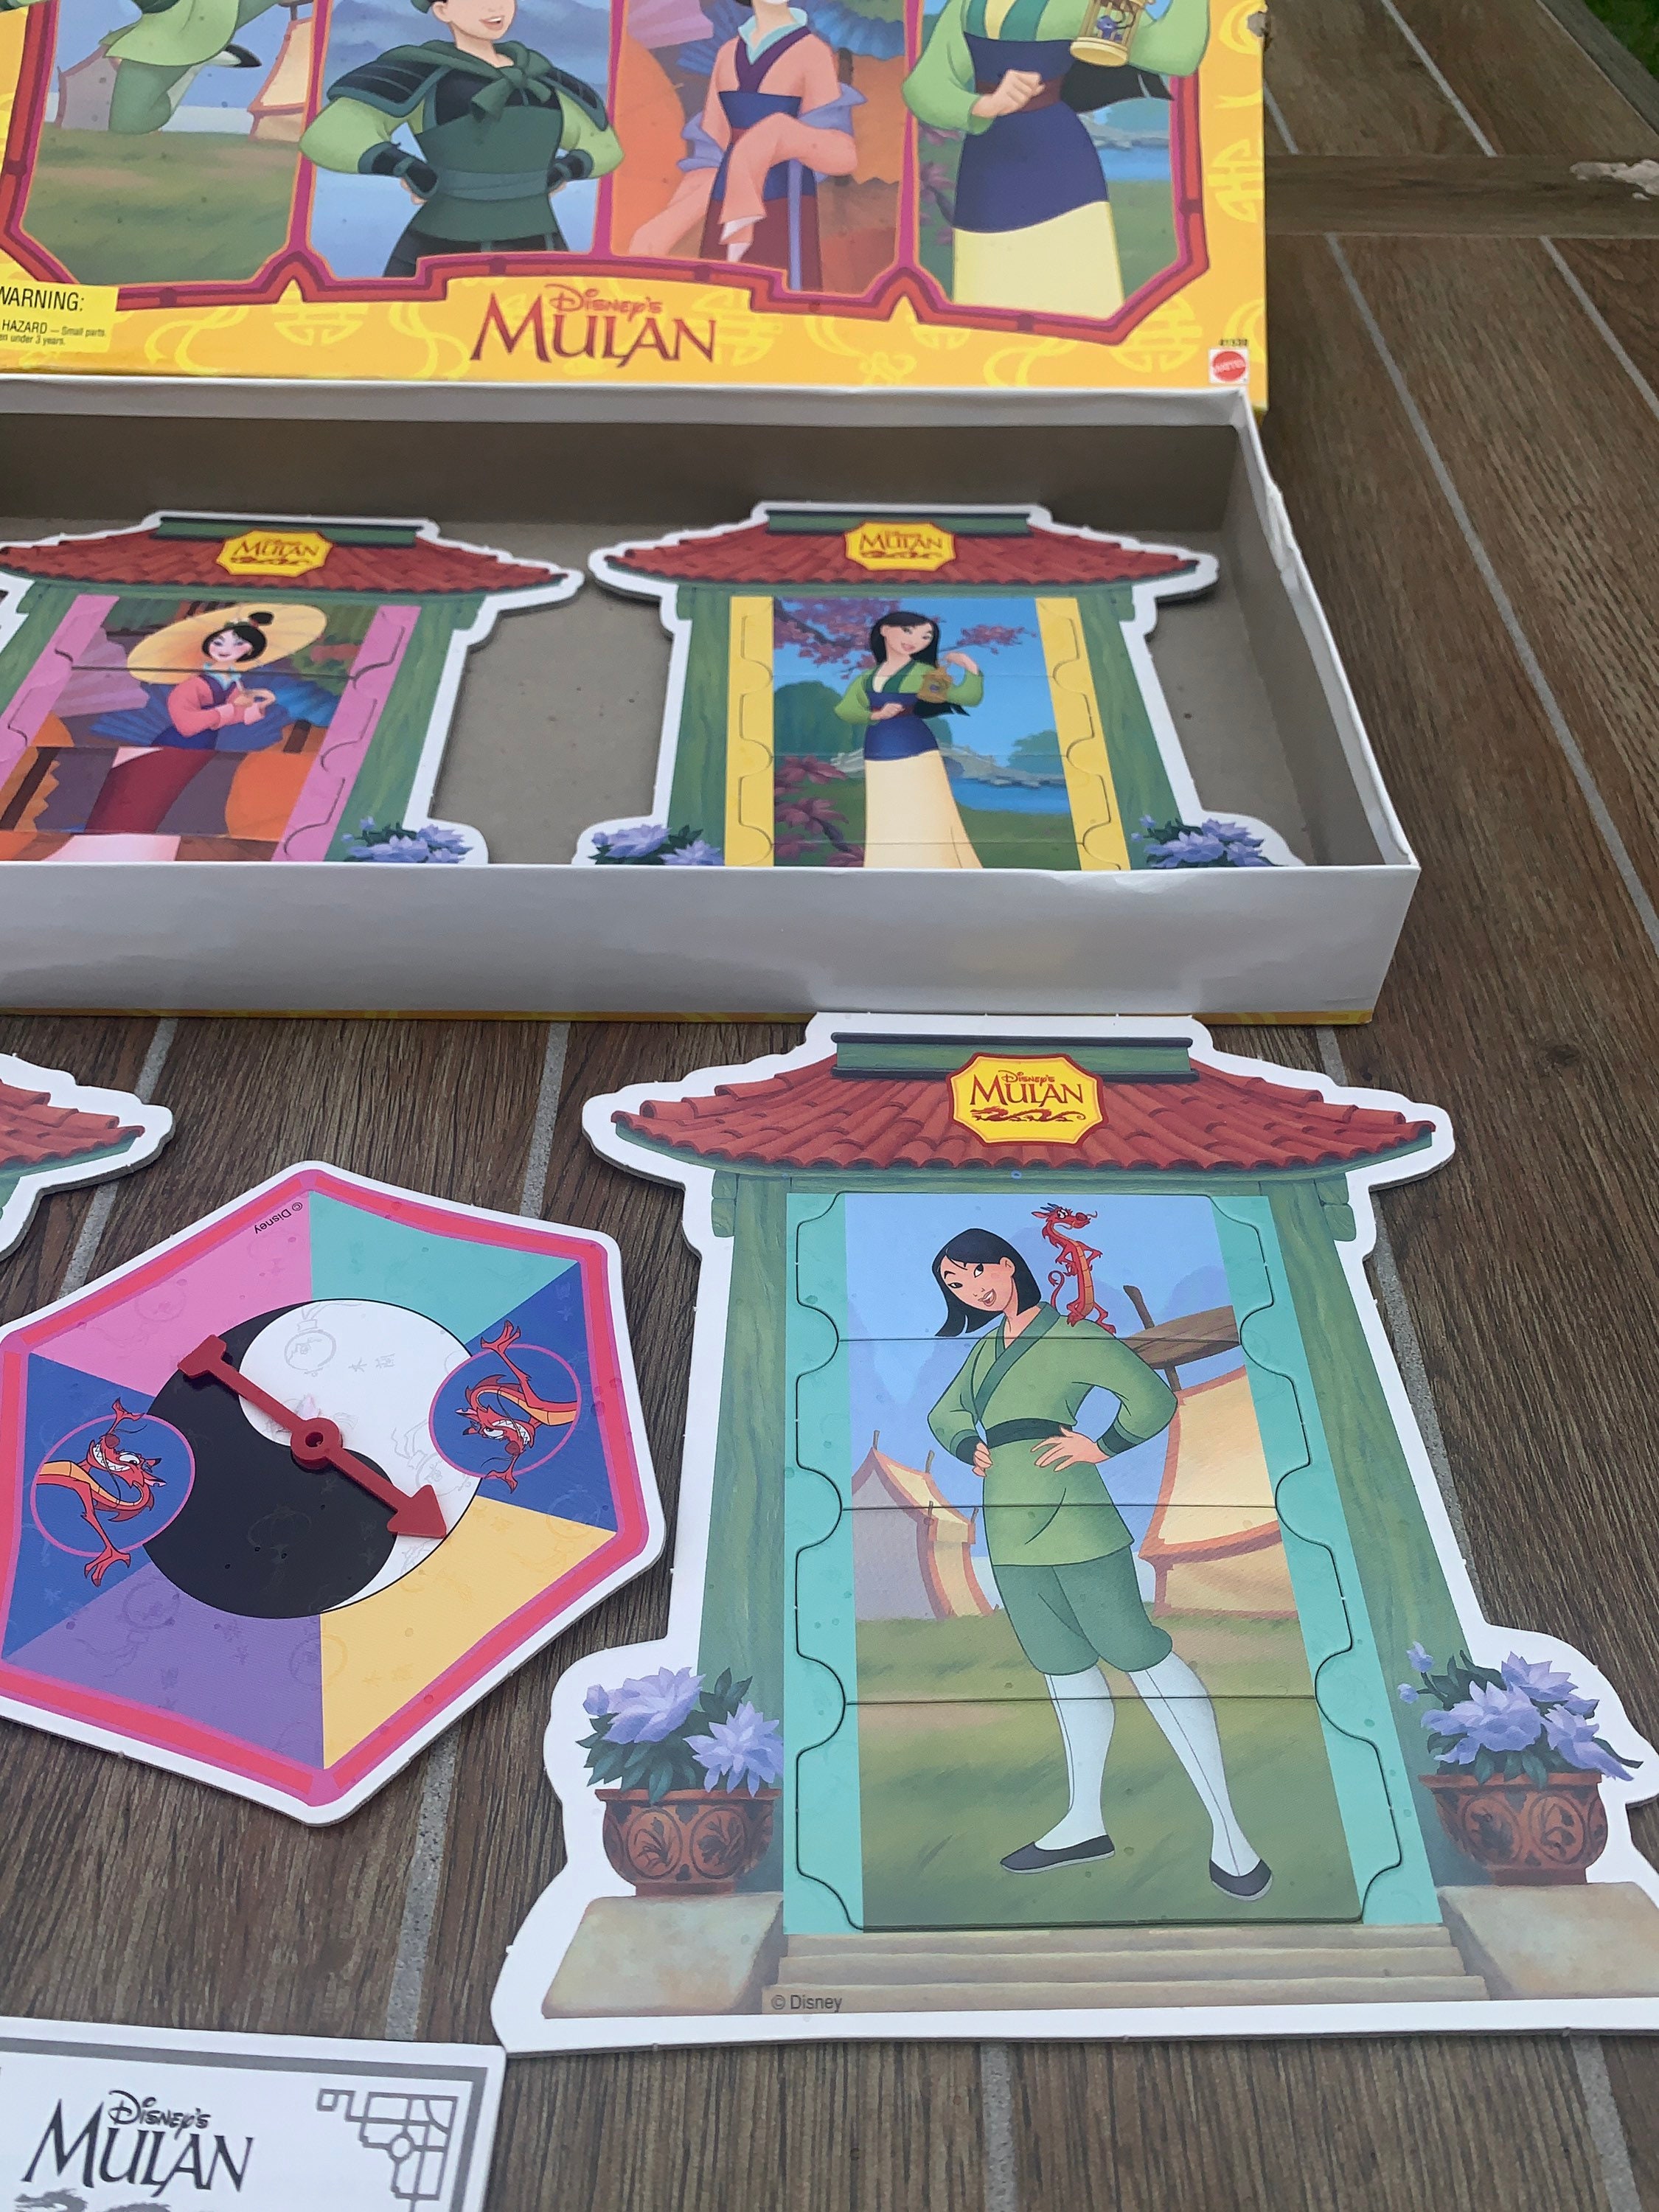 Disney Mulan Matchin' Fashion Matching Puzzle Game by Mattel 1998 Complete